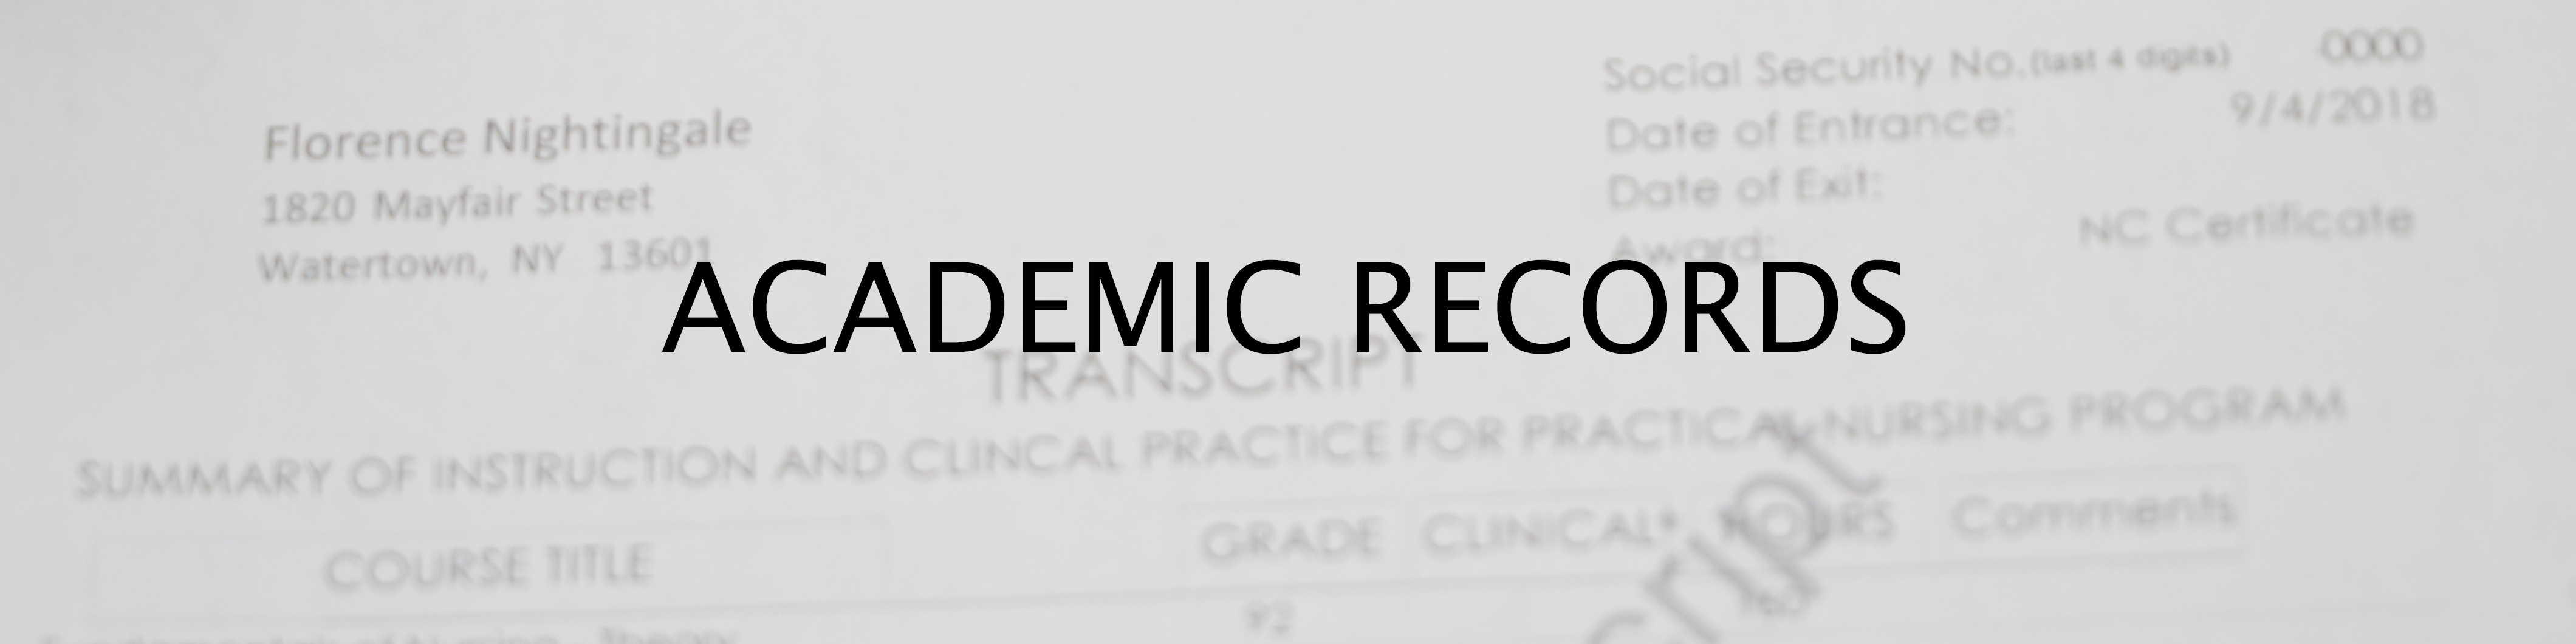 Academic Records header